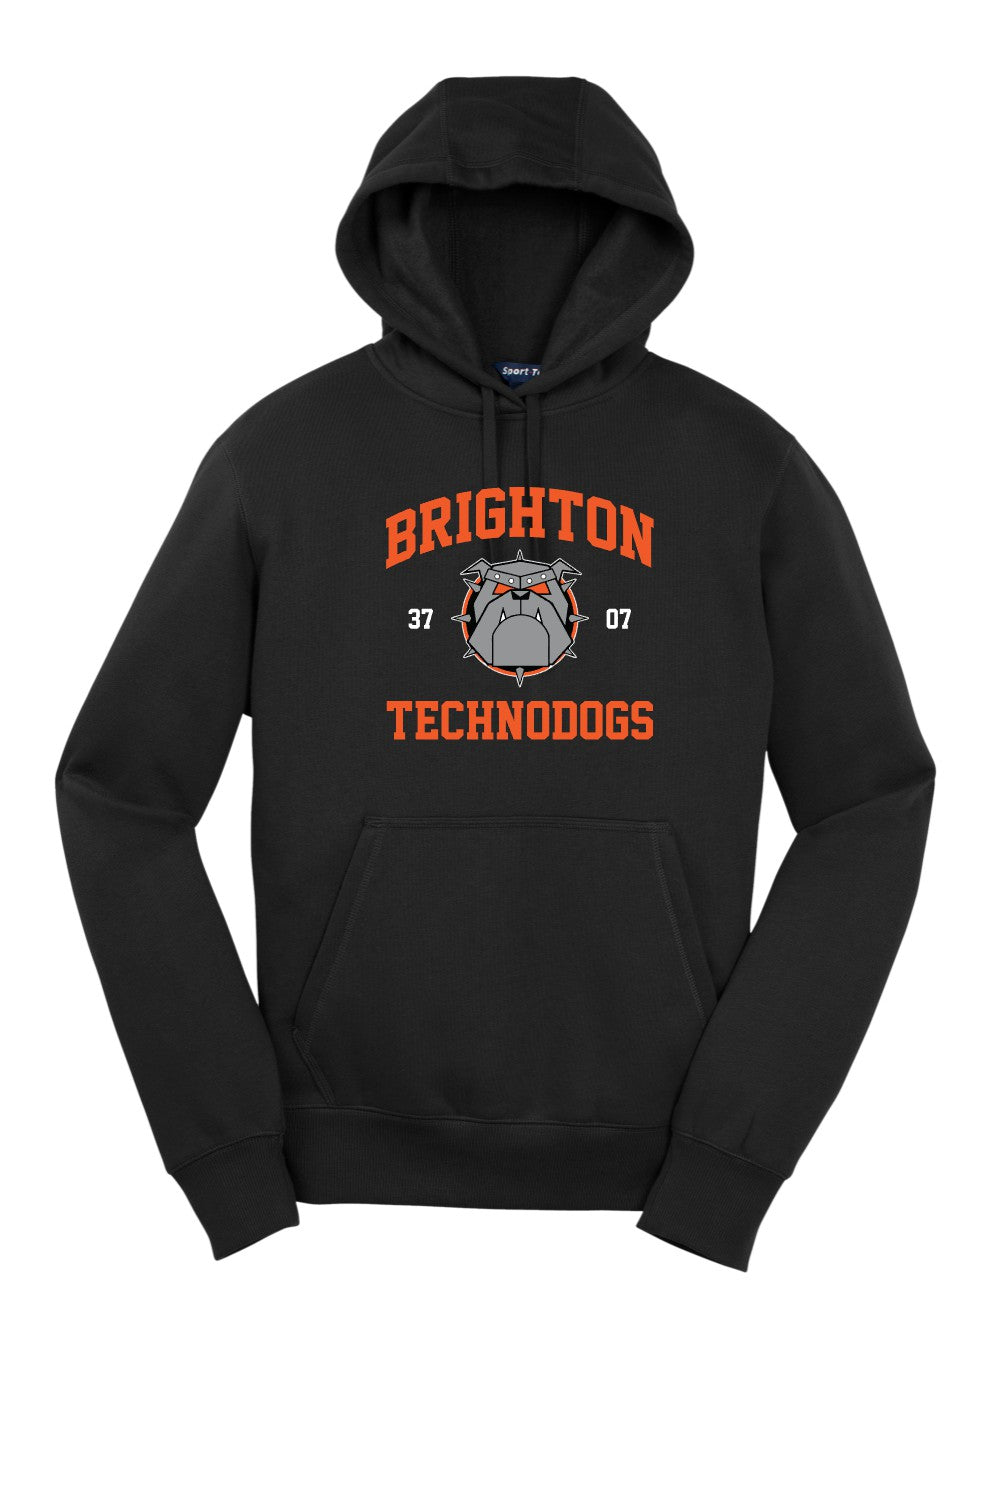 Brighton Technodogs Premium Hoodie